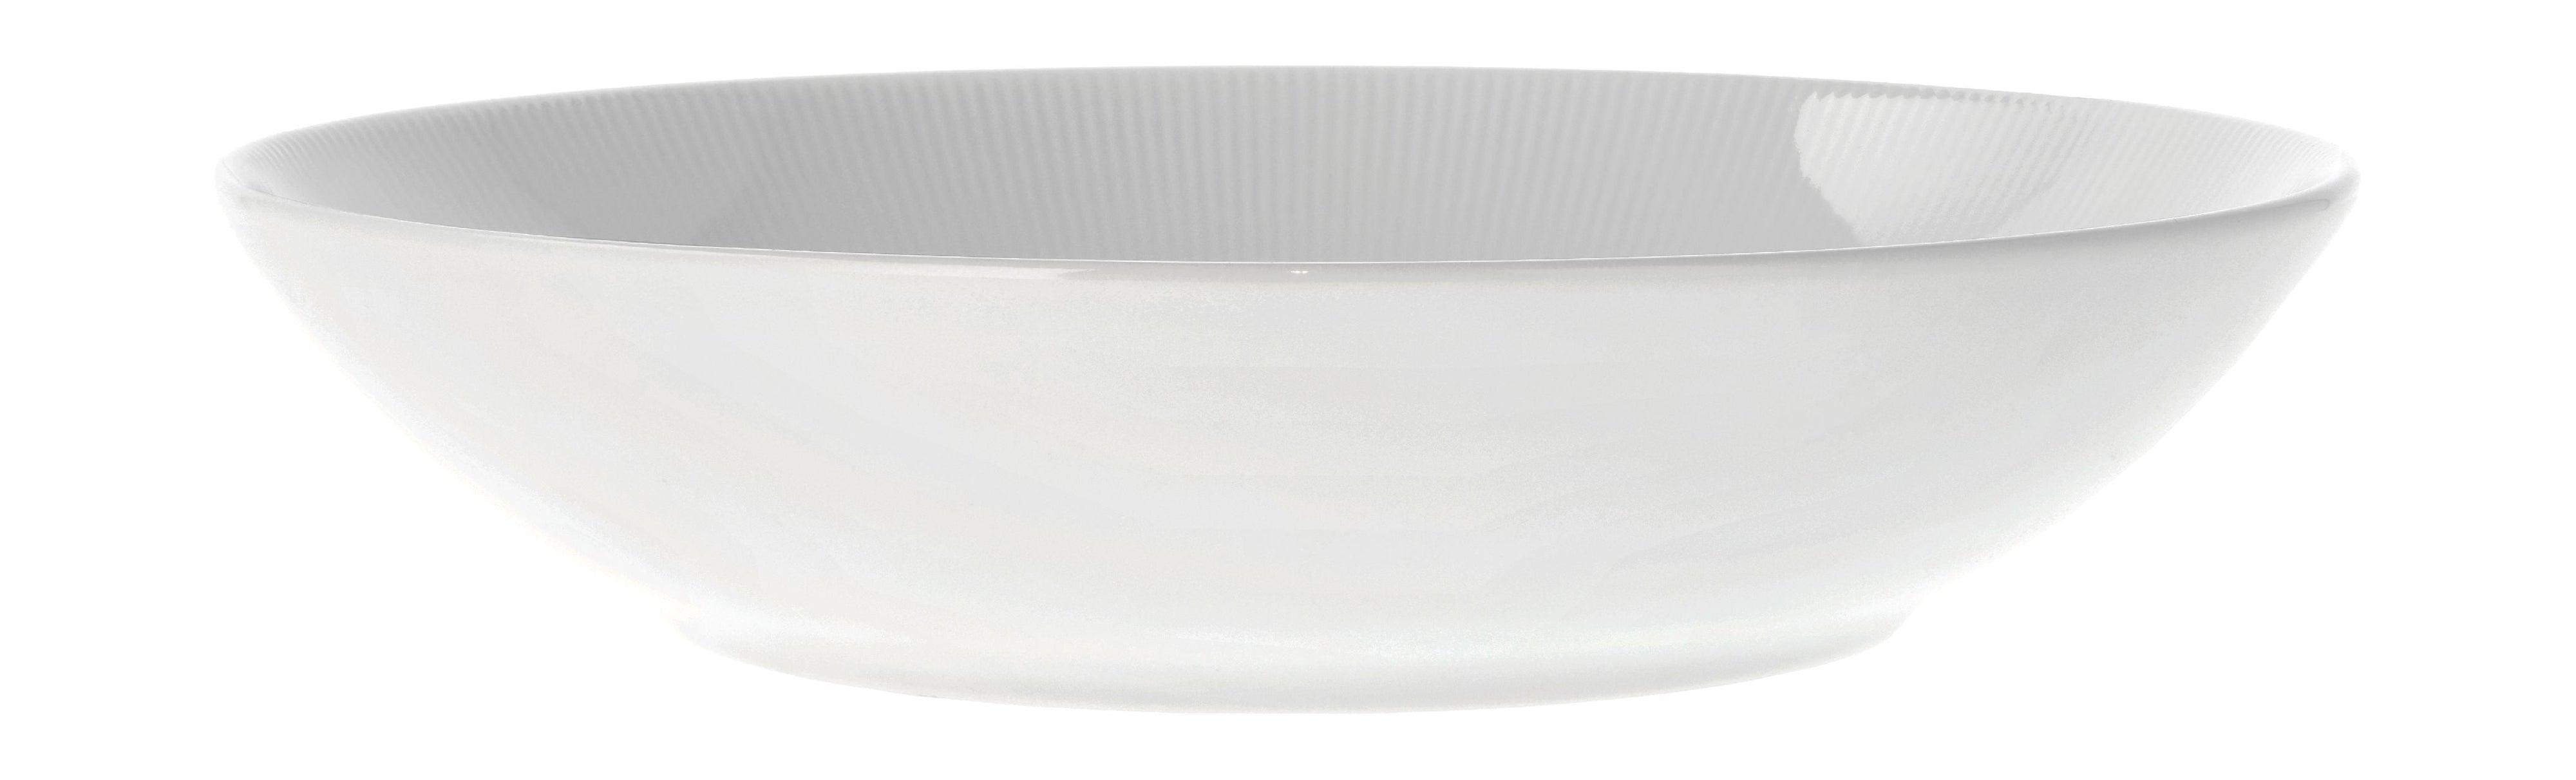 Pillivuyt Eventail Bowl Ø23 cm 0,8 Liter, weiß